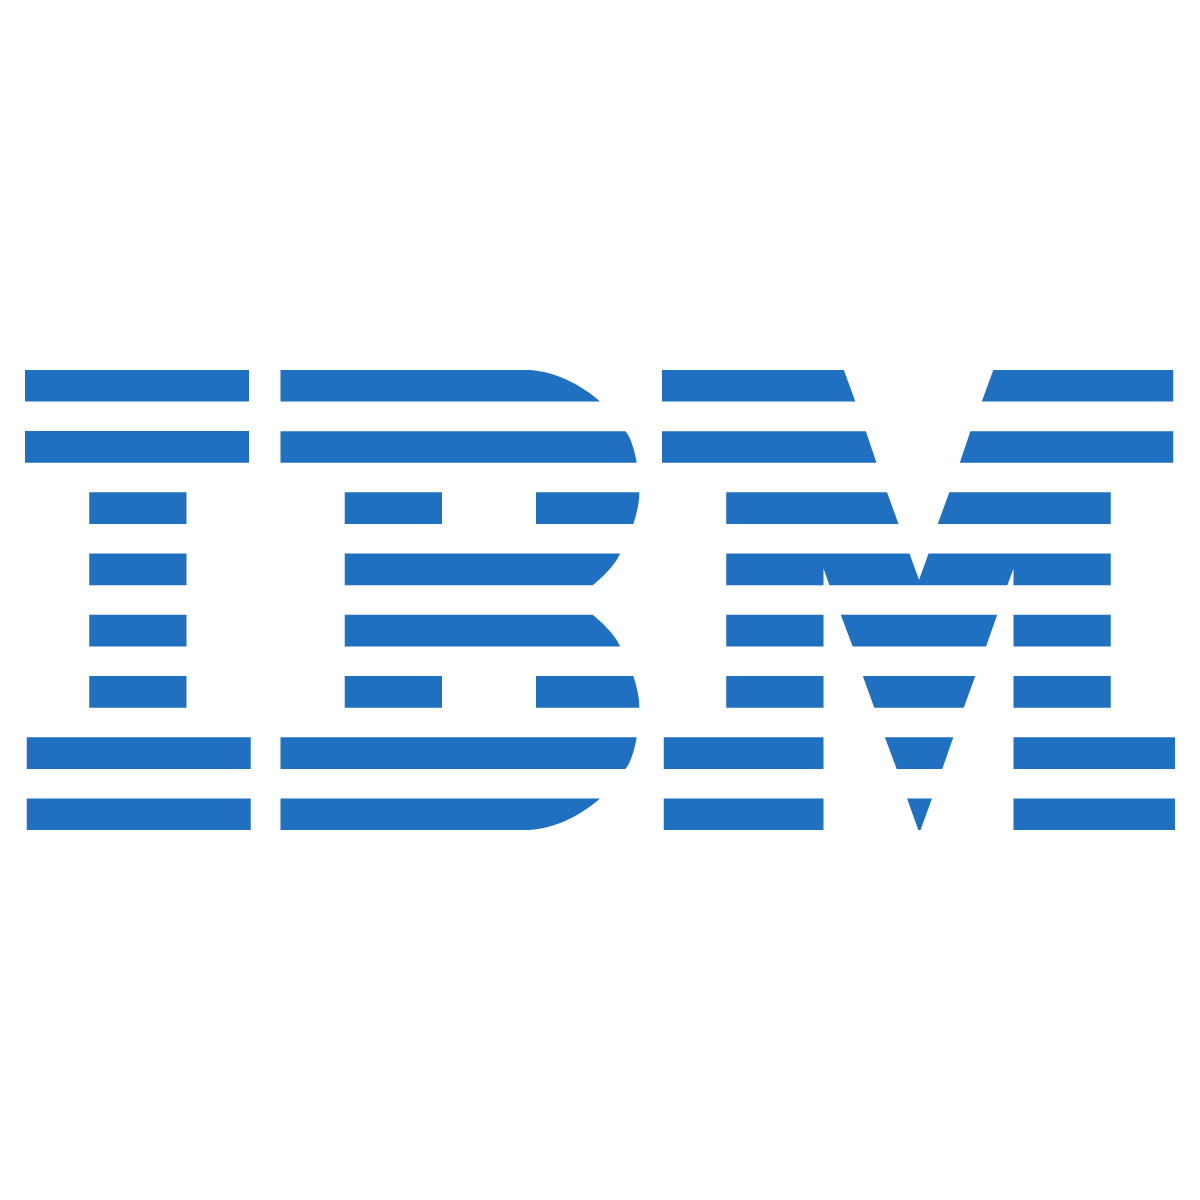 IBM Vector Logo - IBM Logo Vector | Free Vector Silhouette Graphics AI EPS SVG PNG GFX ...